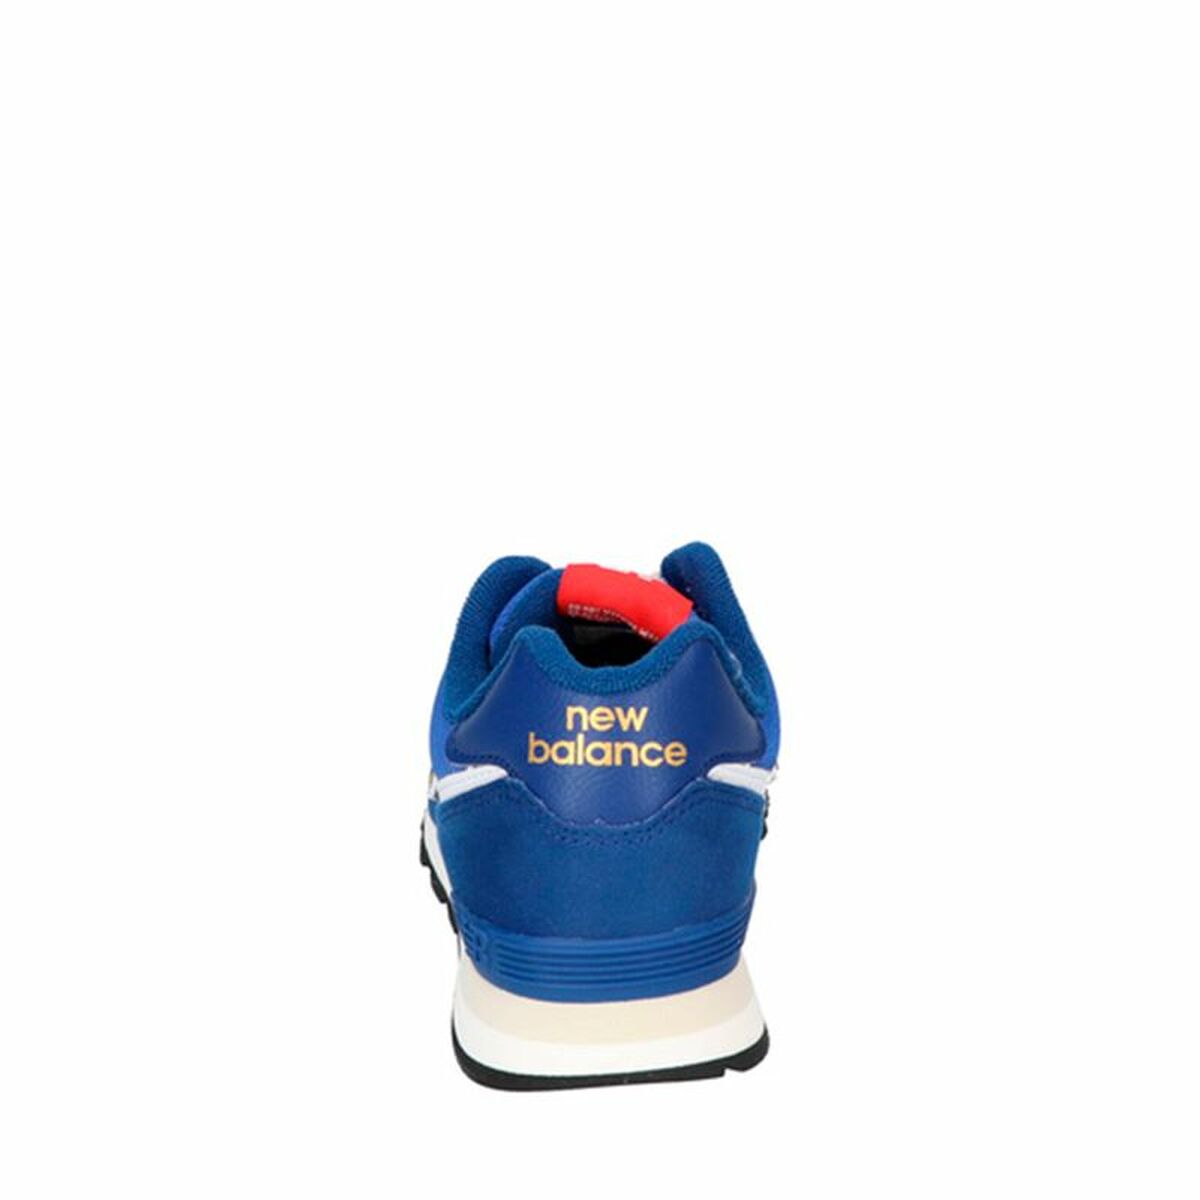 Chaussures casual enfant New Balance 574 Night Sky Bleu - New Balance - Jardin D'Eyden - jardindeyden.fr